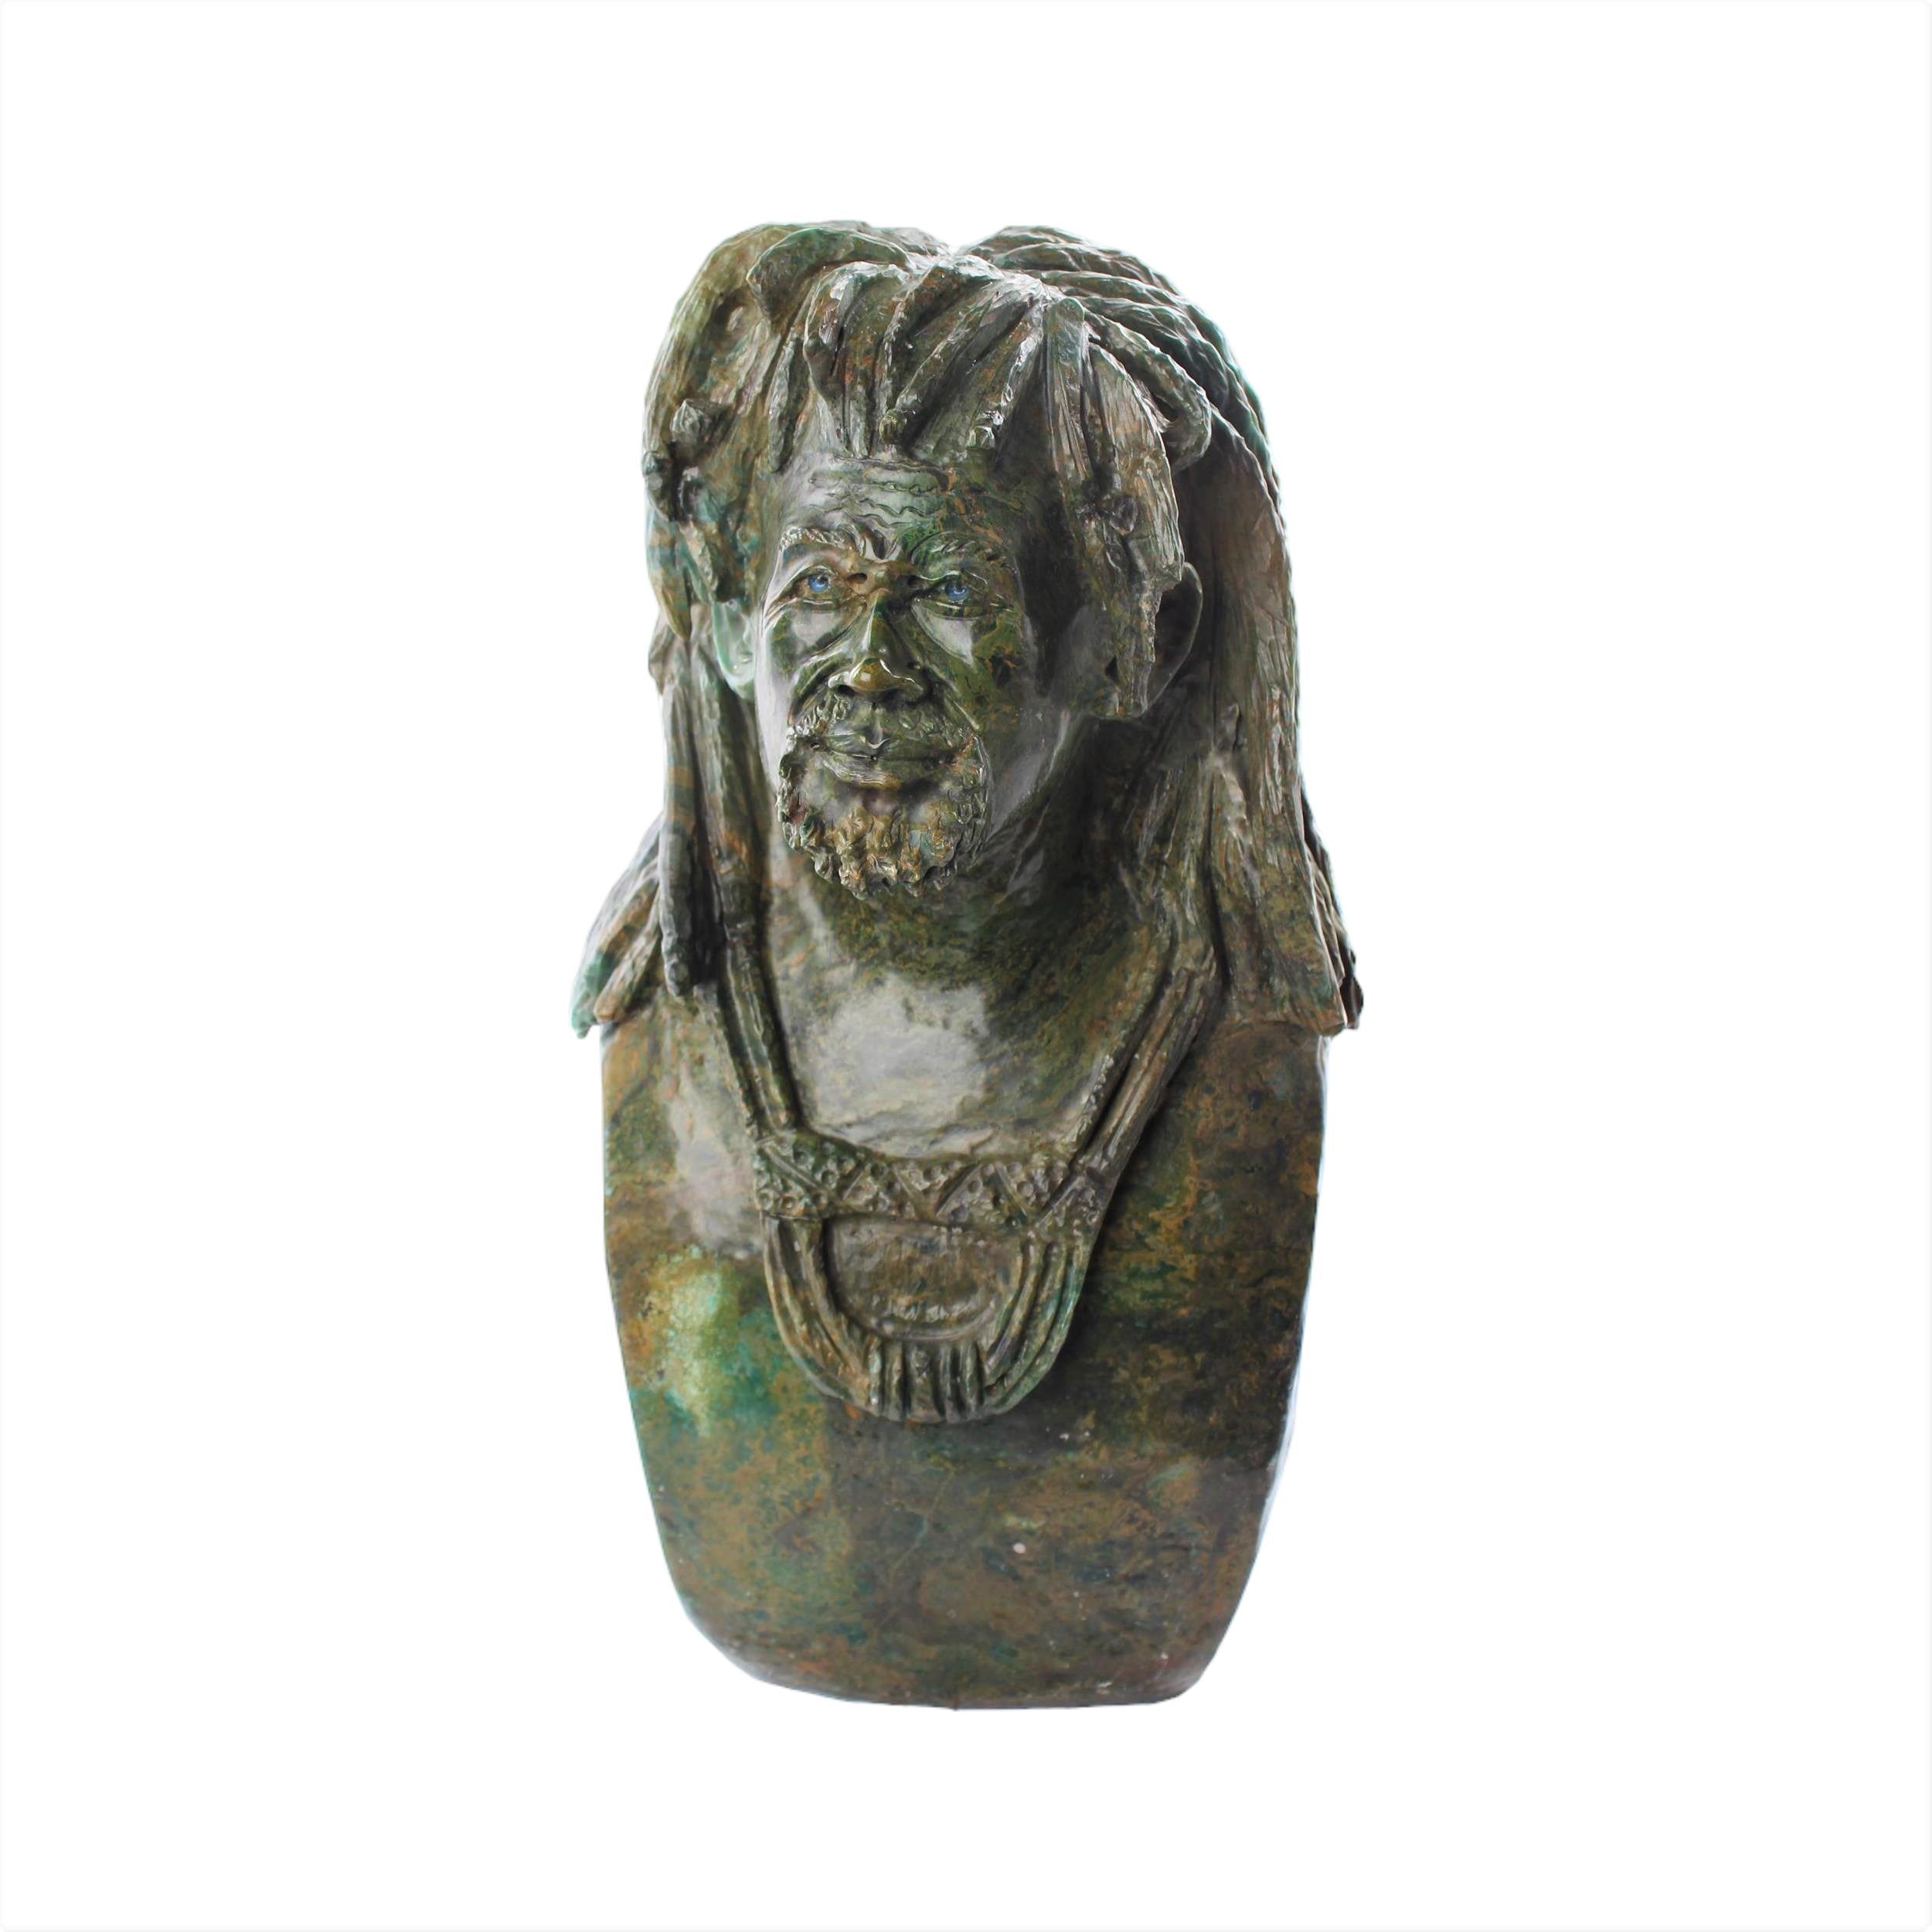 Shona Tribe Verdite Stone Busts ~20.5" Tall